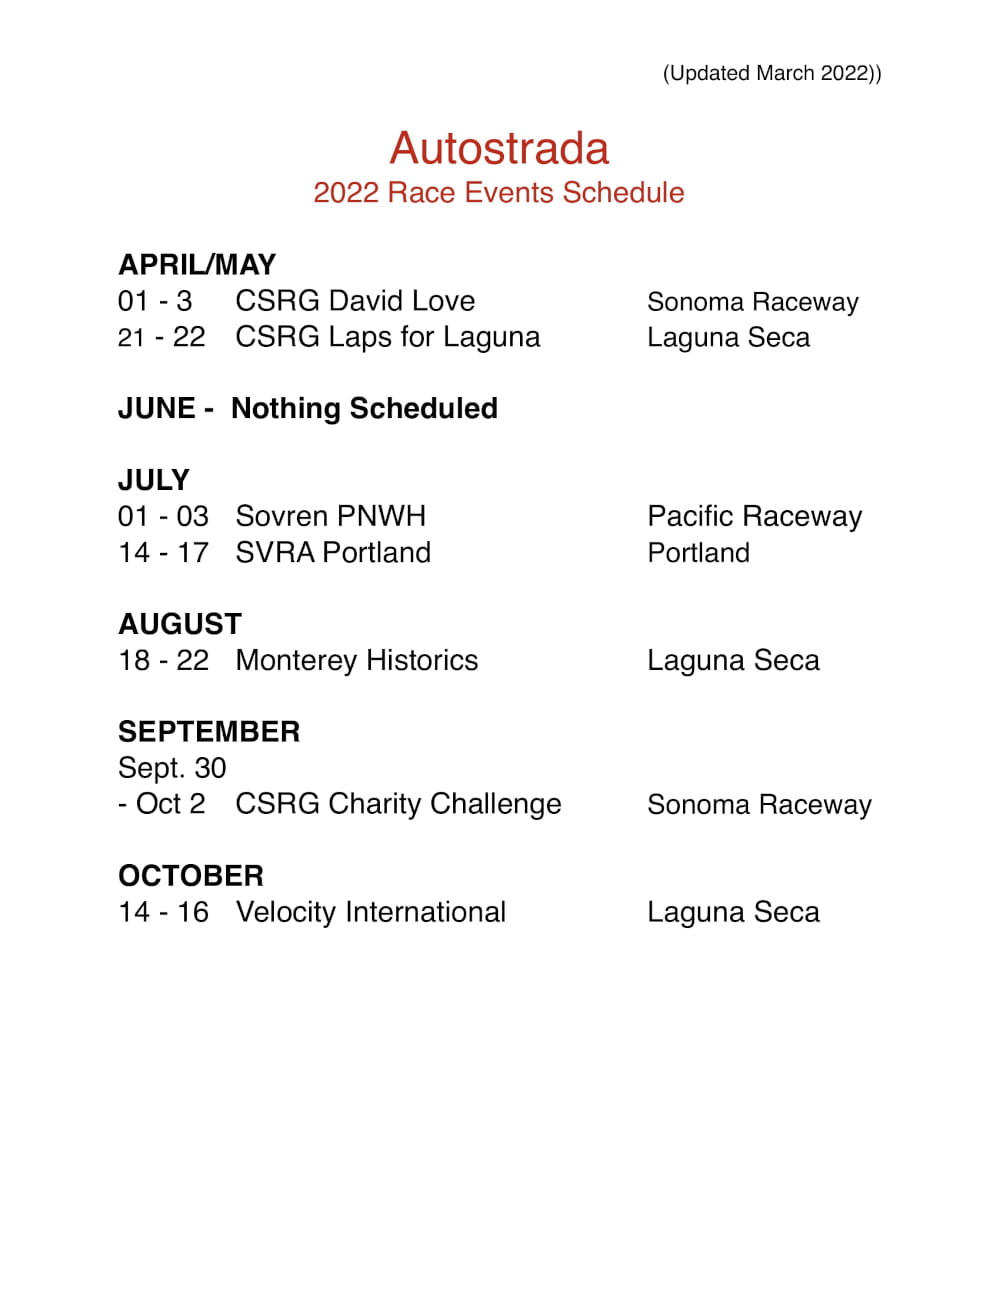  Autostrada Race Schedule 2022